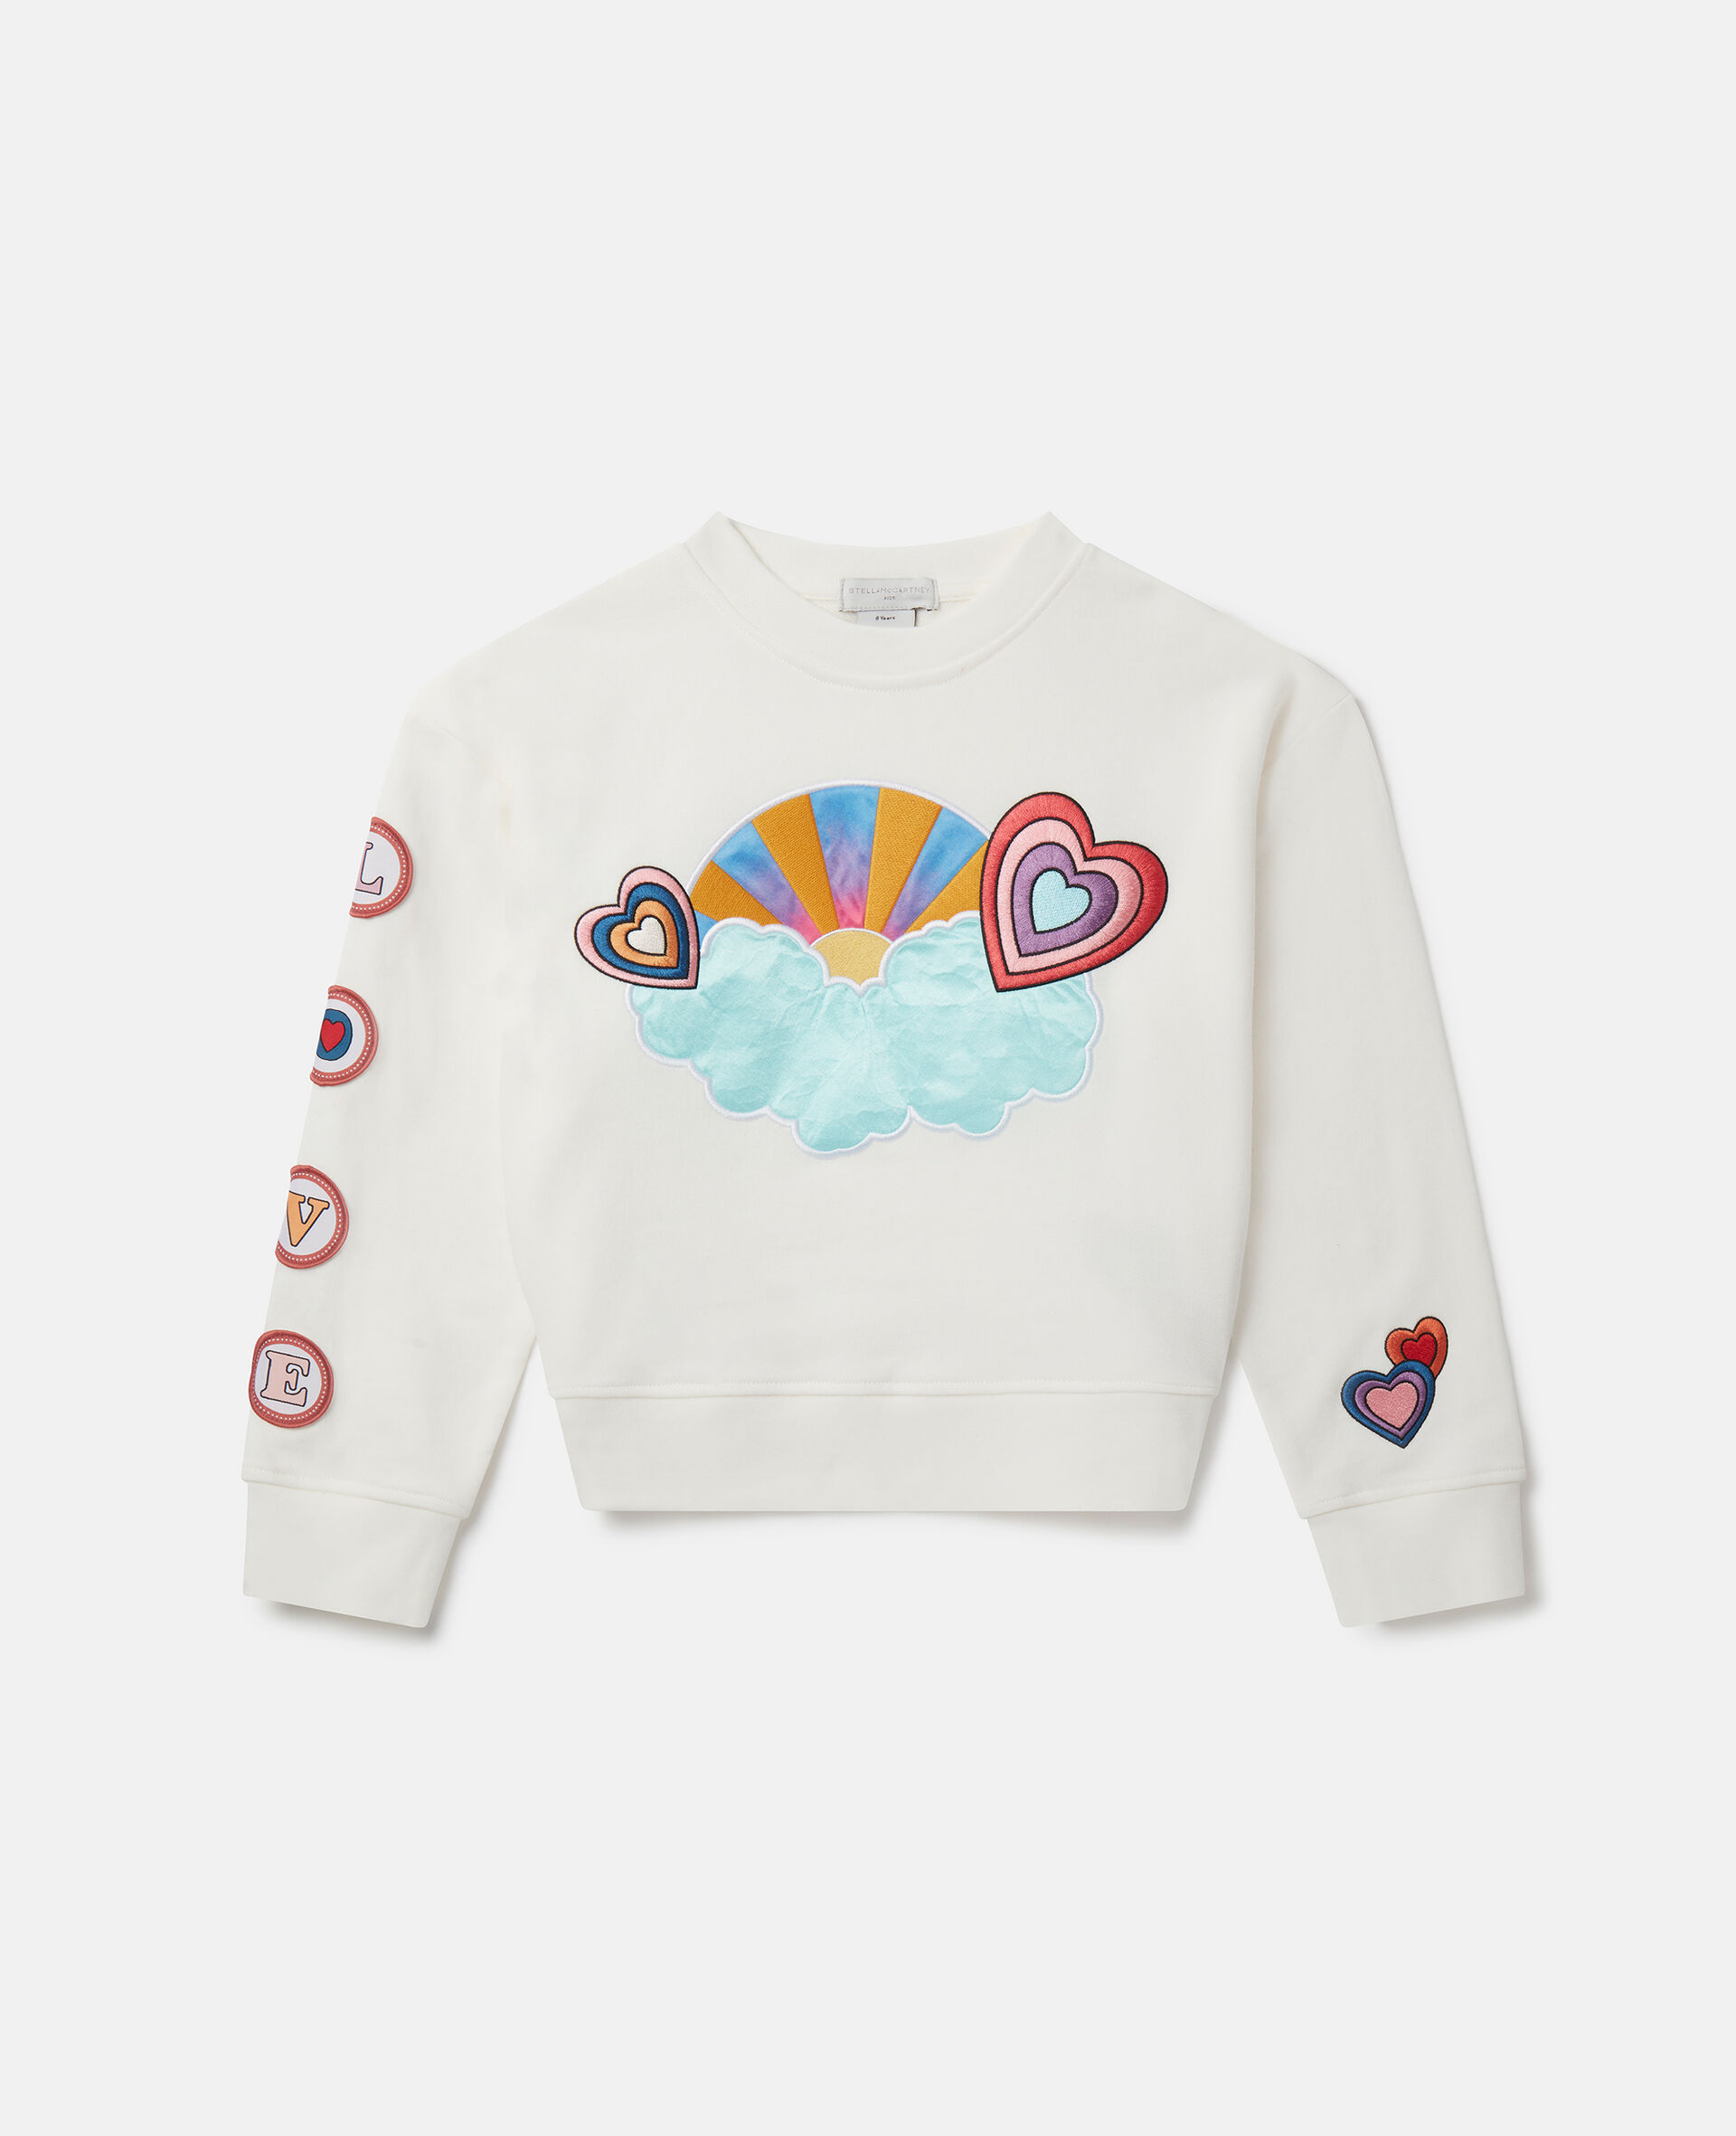 I Love You Embroidered Sweatshirt-Multicoloured-medium